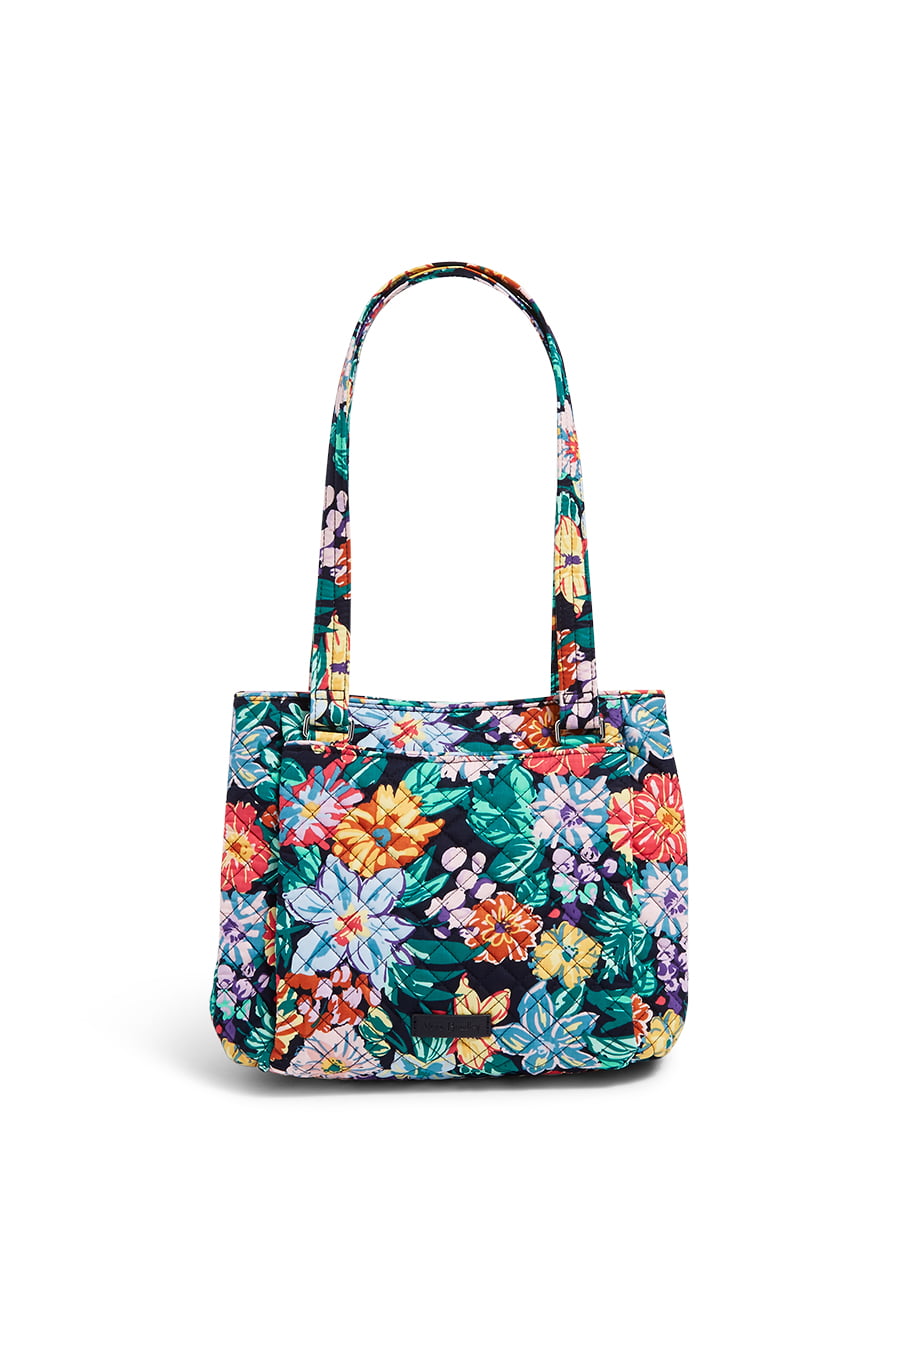 Flowers Colors Bloom Nature Colorful Petals Unique Custom Outdoor Shoulders Bag Fabric Backpack Multipurpose Daypacks For Adult